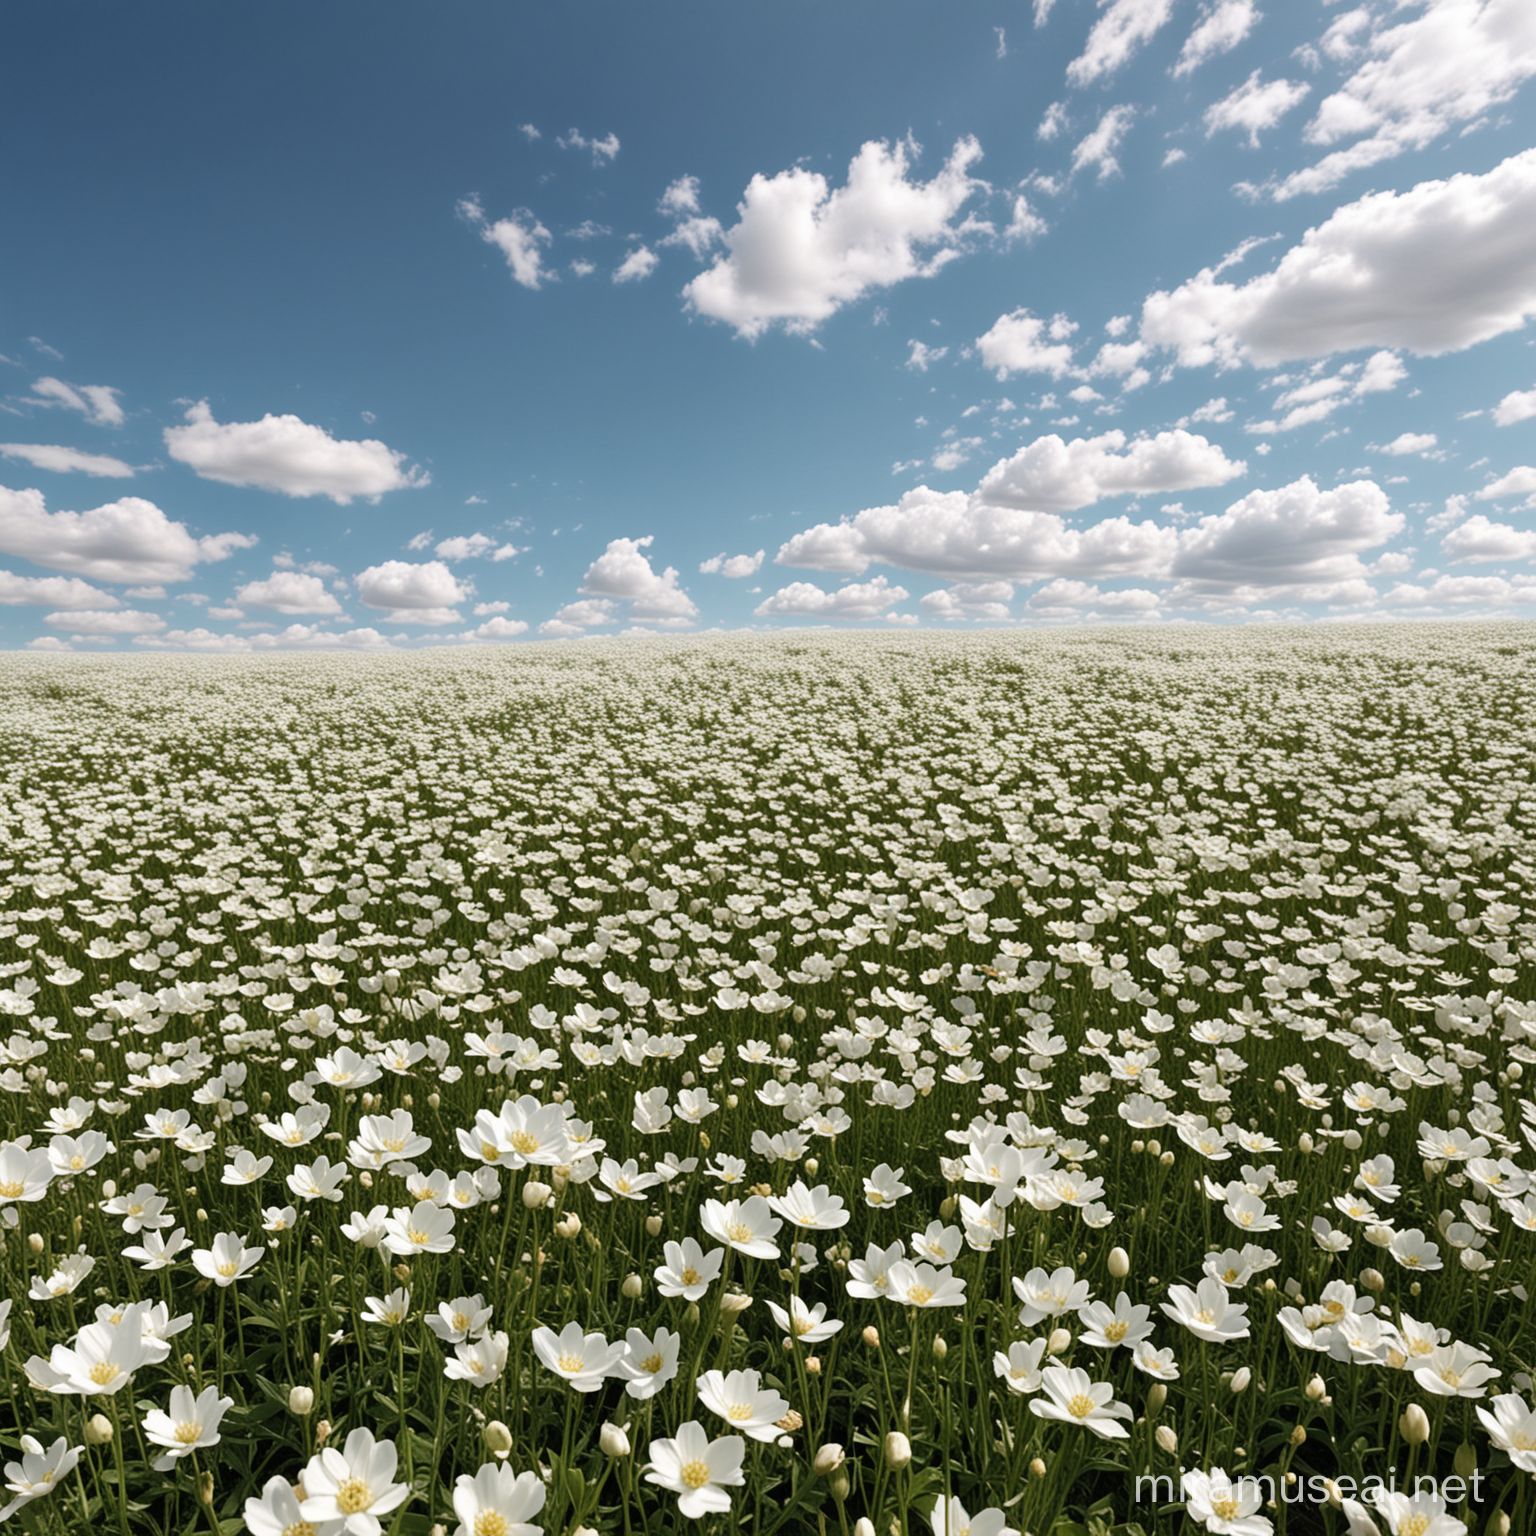 Serene Landscape Vast Field of White Flowers under Clear Sky